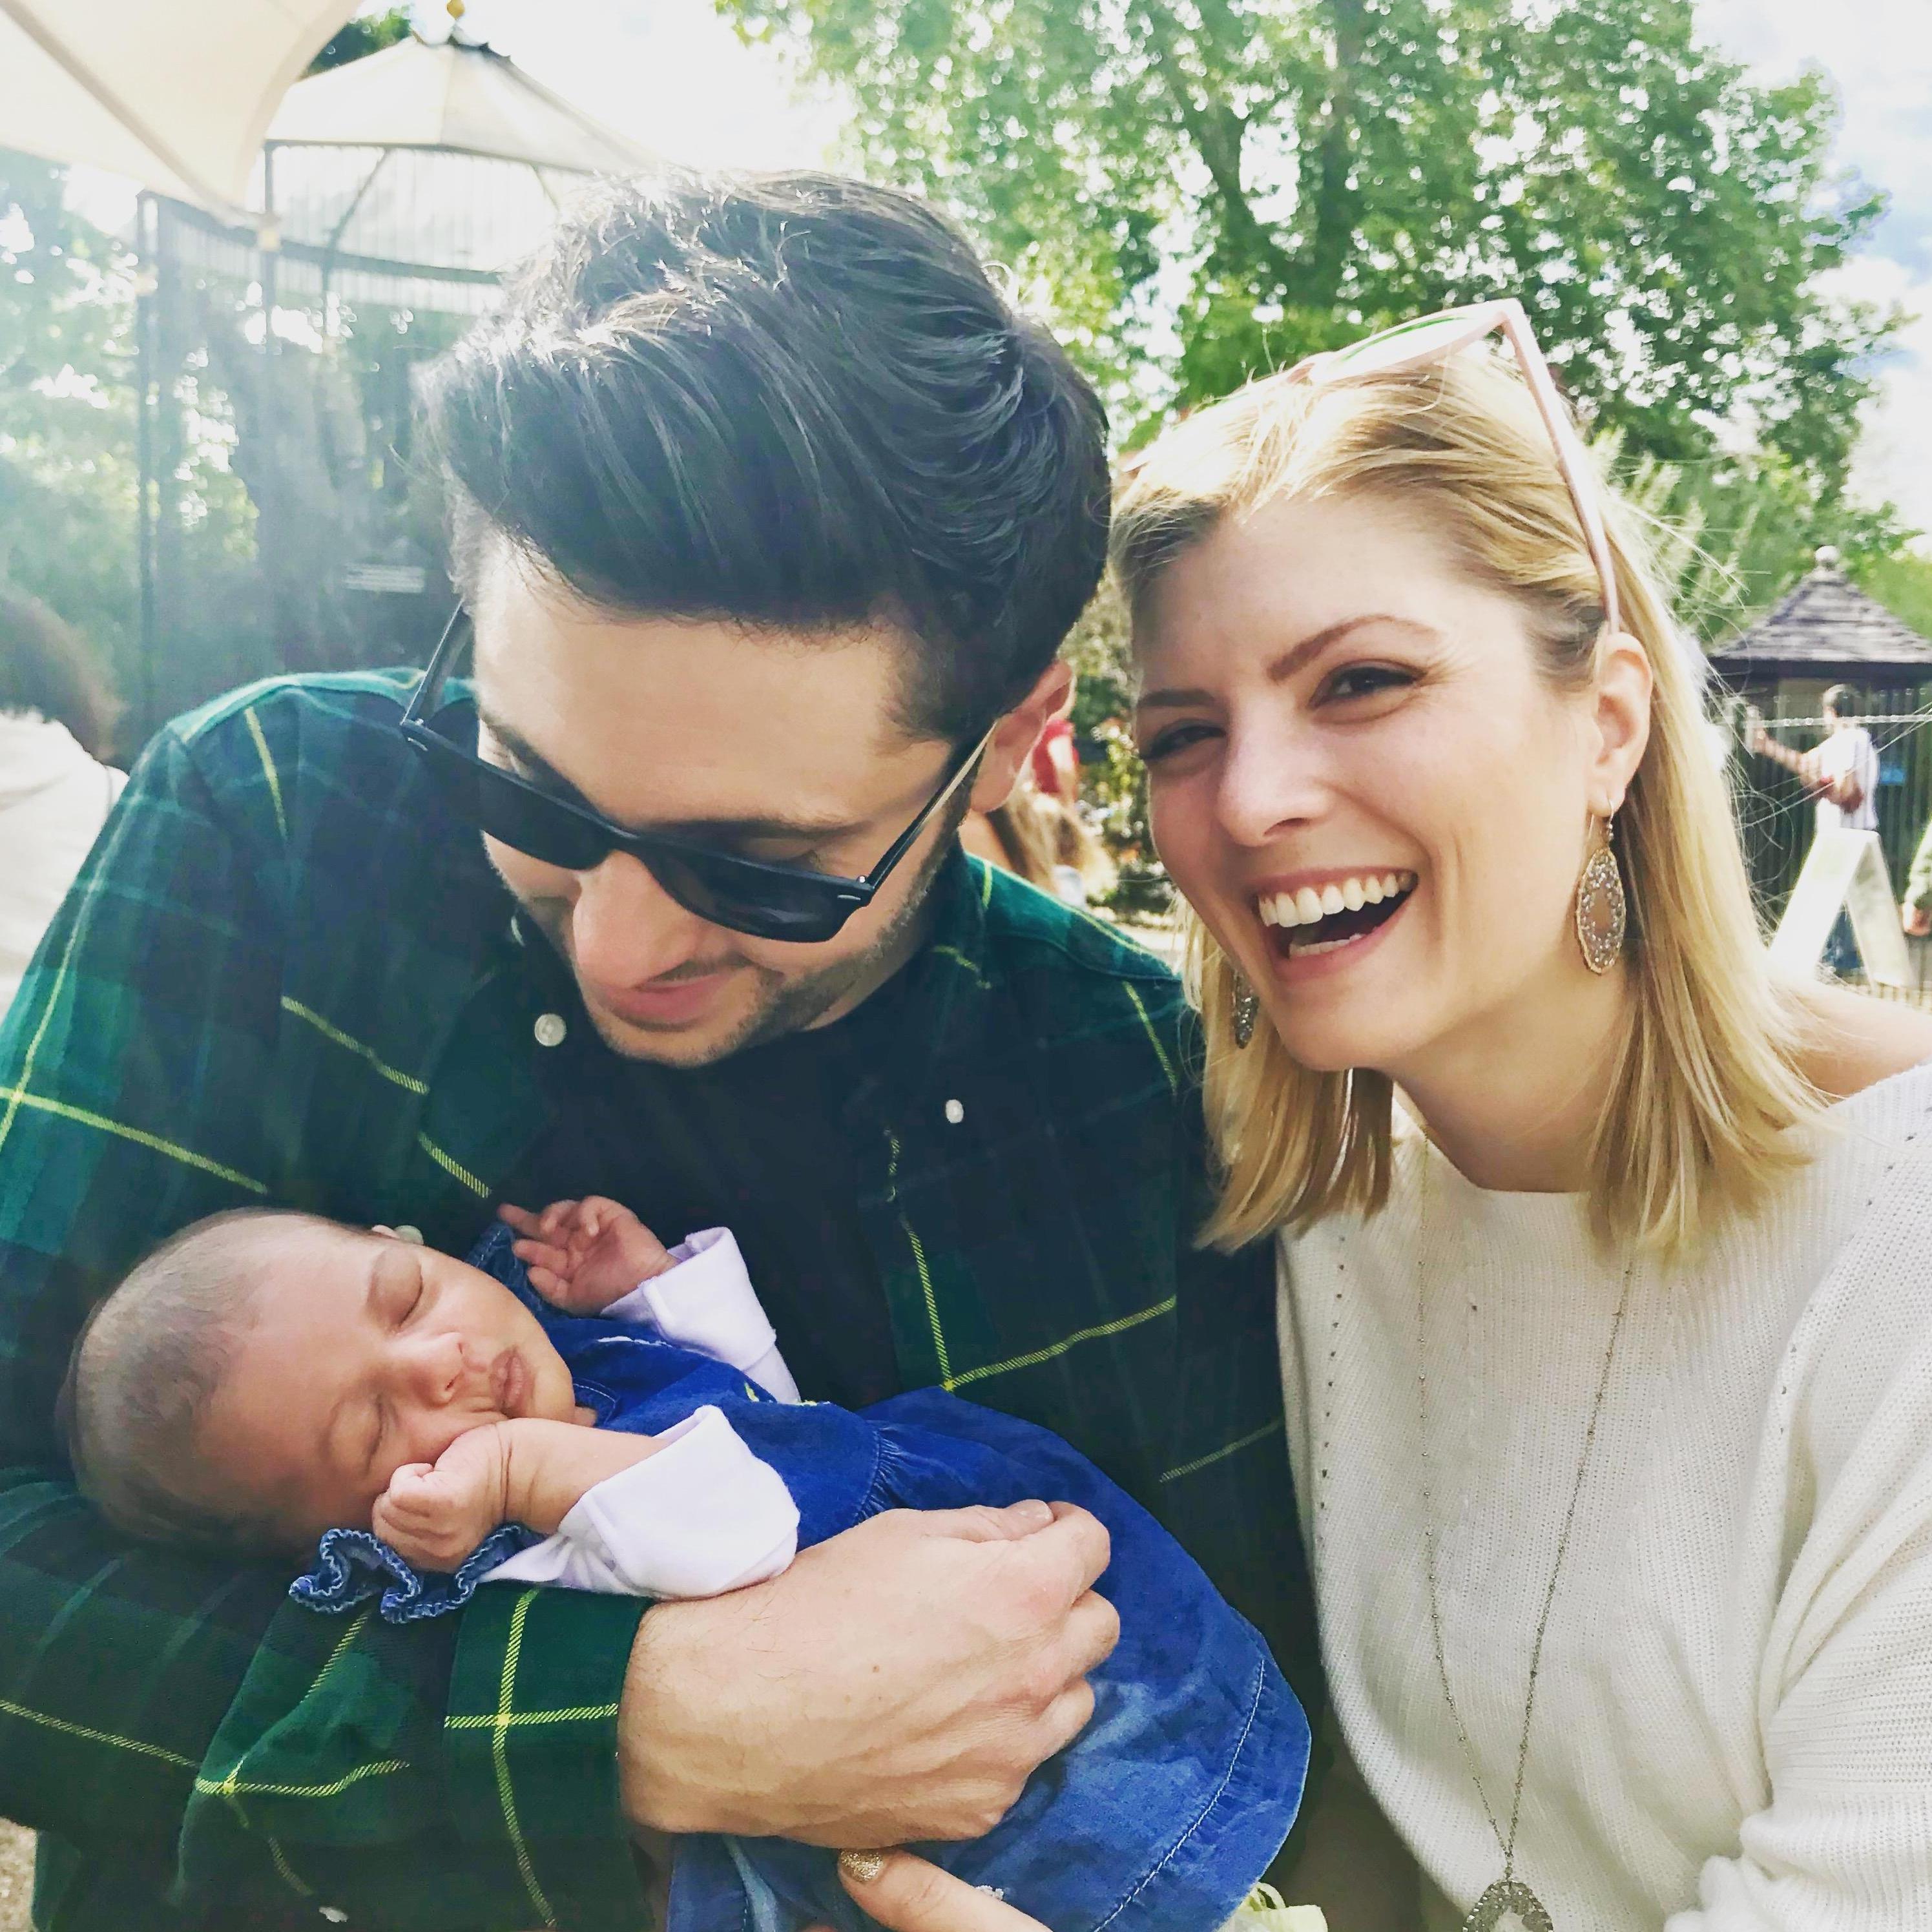 Meeting baby Elodie together in London
2018